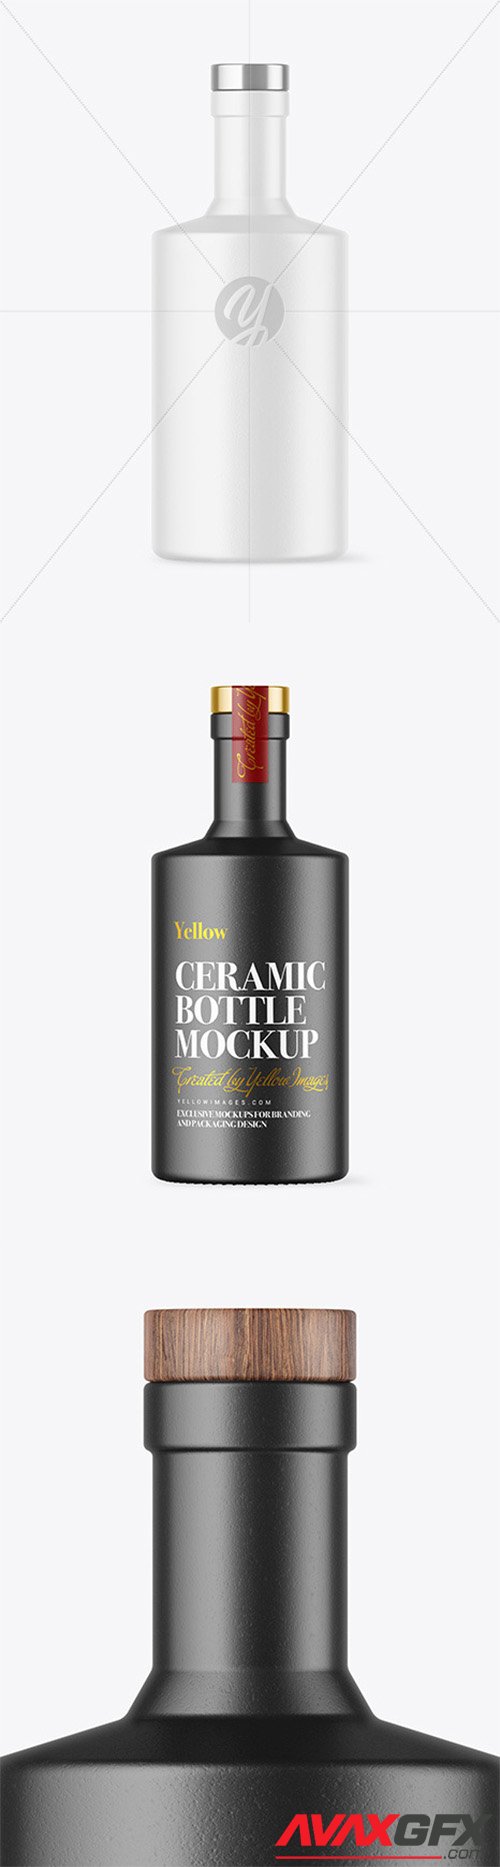 Ceramic Bottle with Wooden Cap Mockup 80770